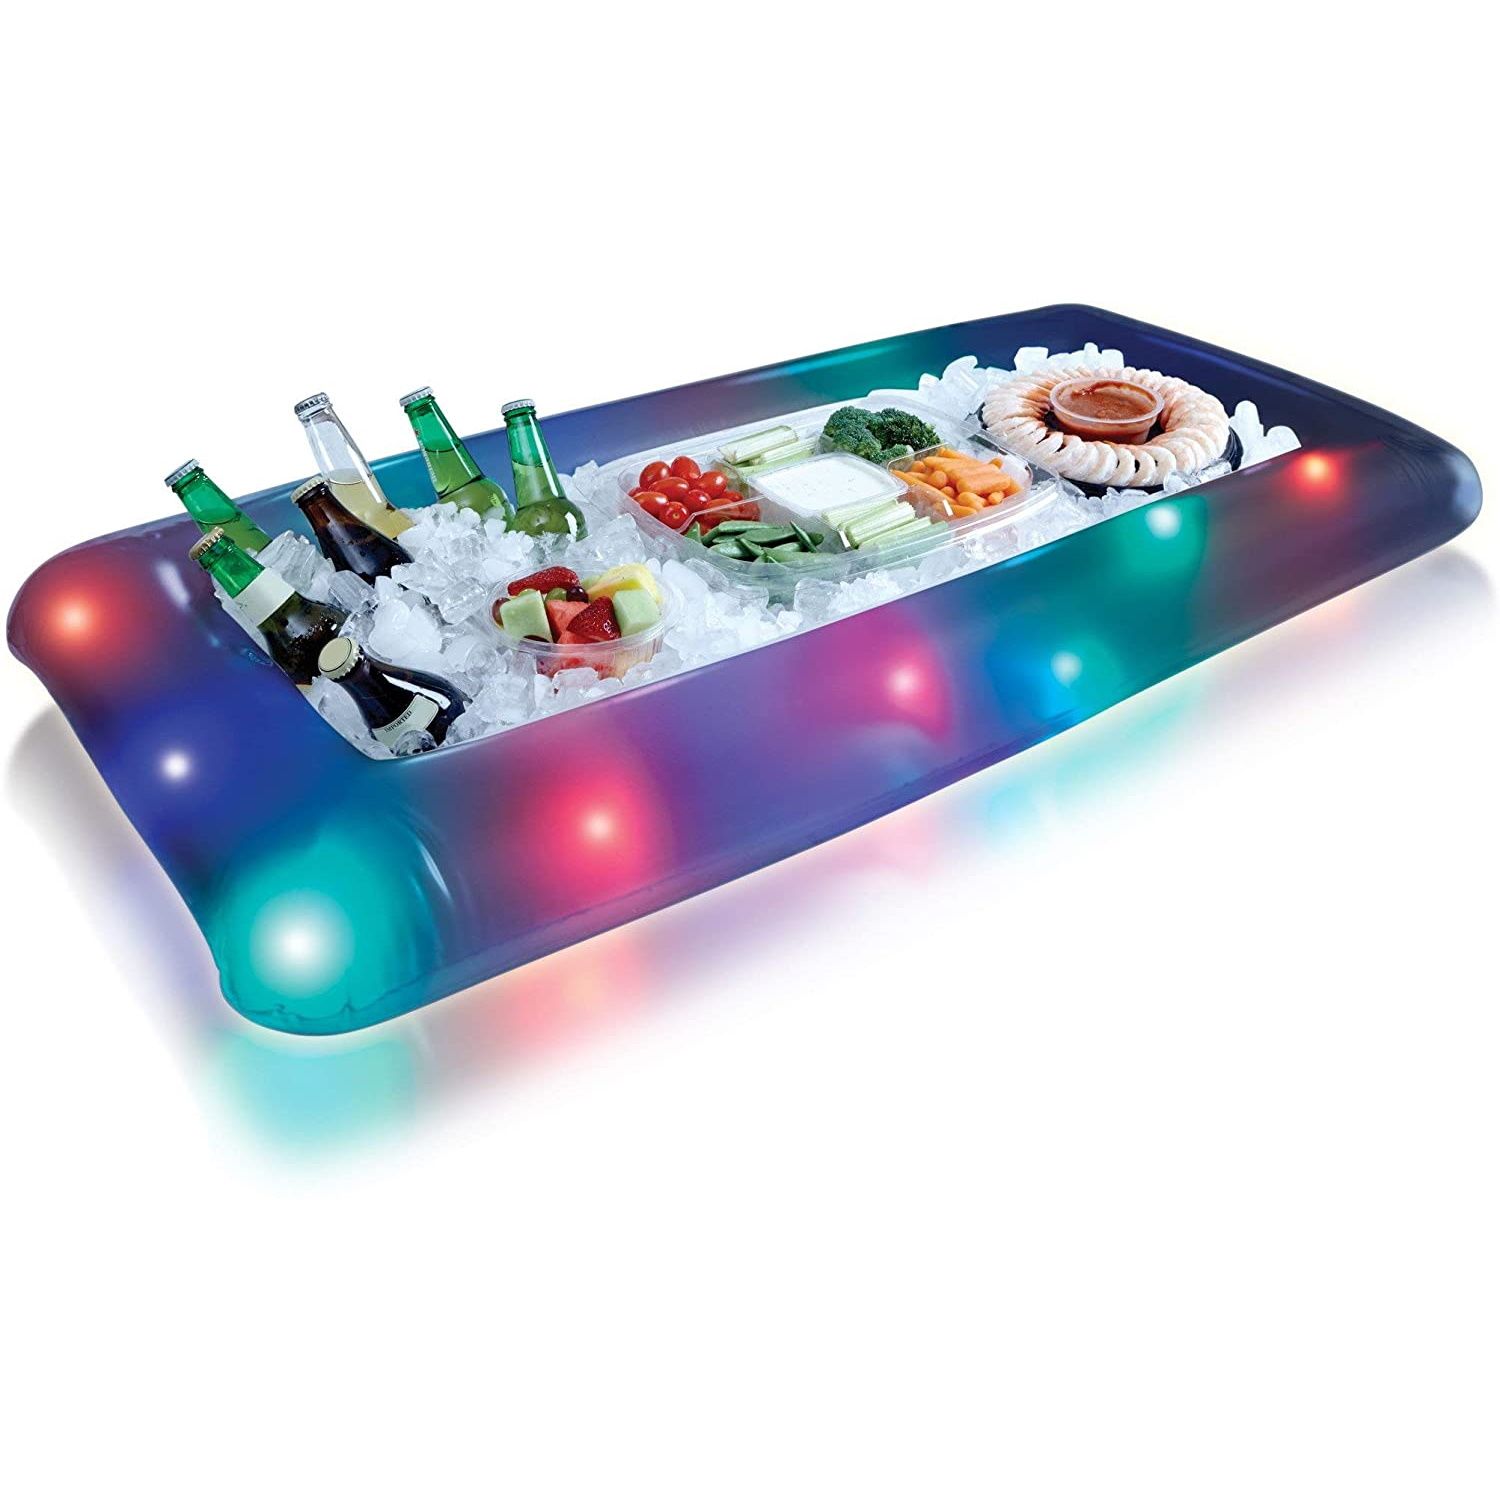 This Light-Up Buffet Cooler Will Brighten Up Your Summer Parties